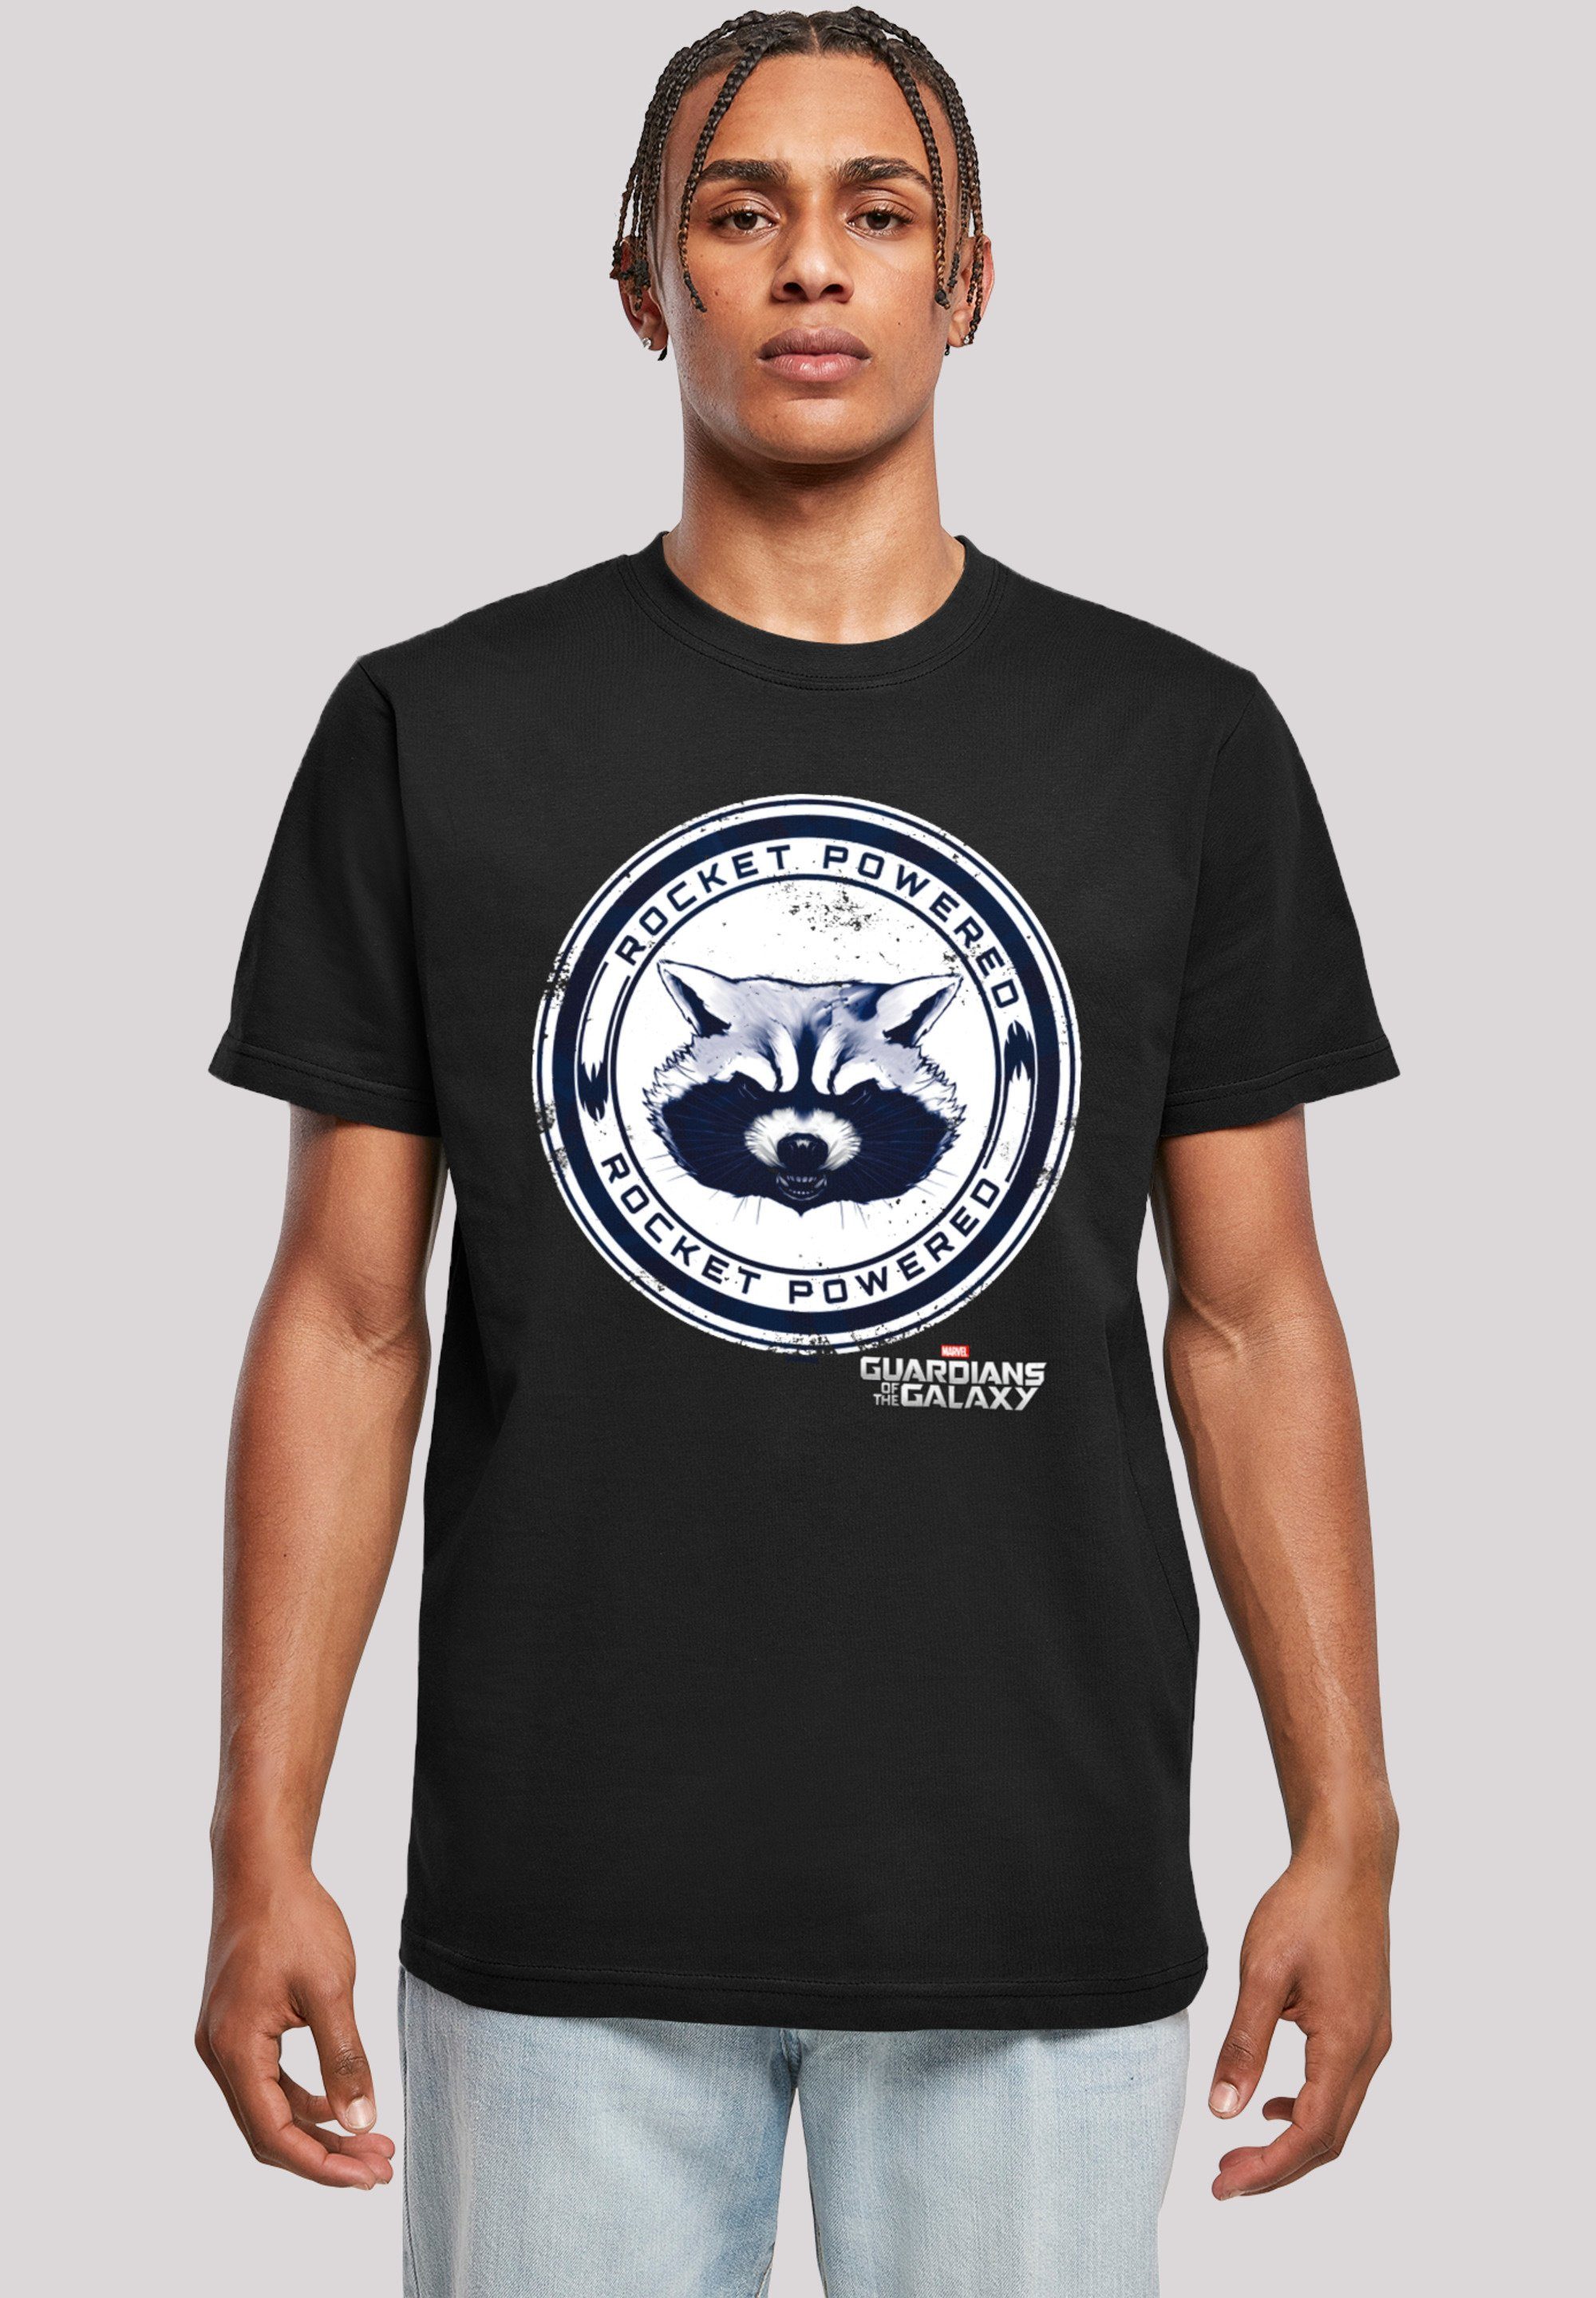 Herren,Premium Rocket Marvel Of The schwarz F4NT4STIC Guardians Merch,Regular-Fit,Basic,Logo Galaxy T-Shirt Powered Print